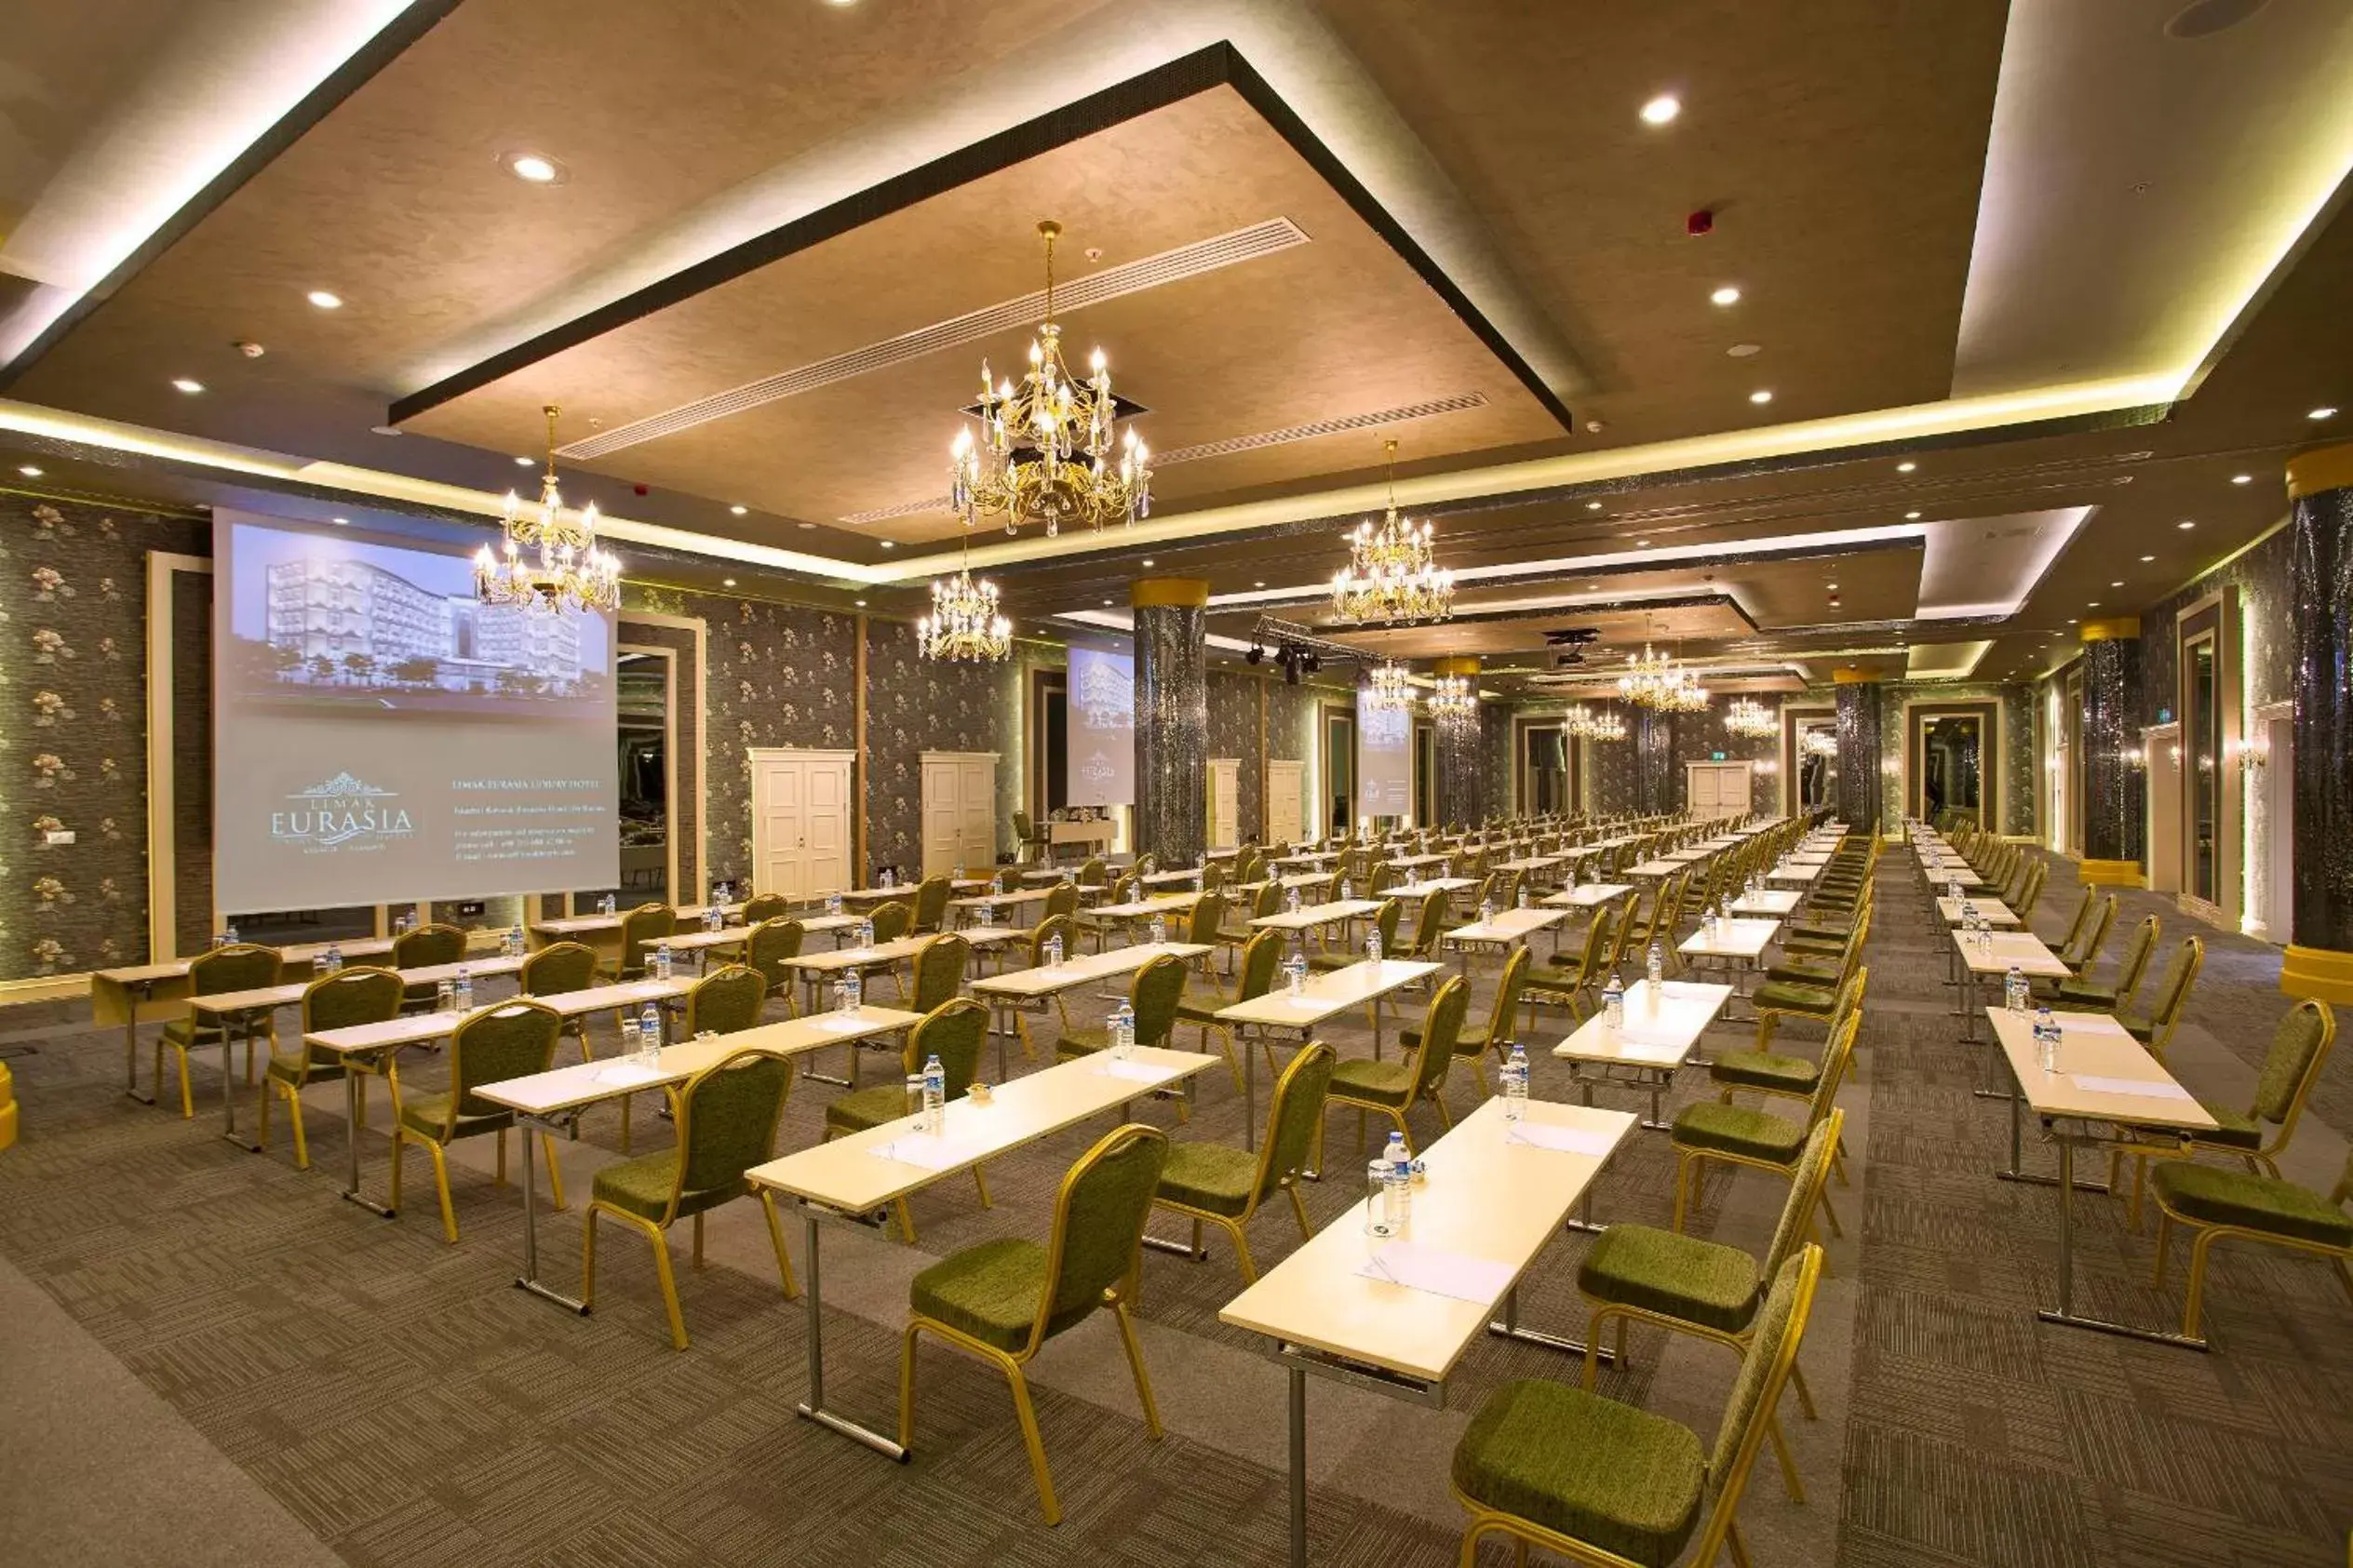 Business facilities in Limak Eurasia Luxury Hotel